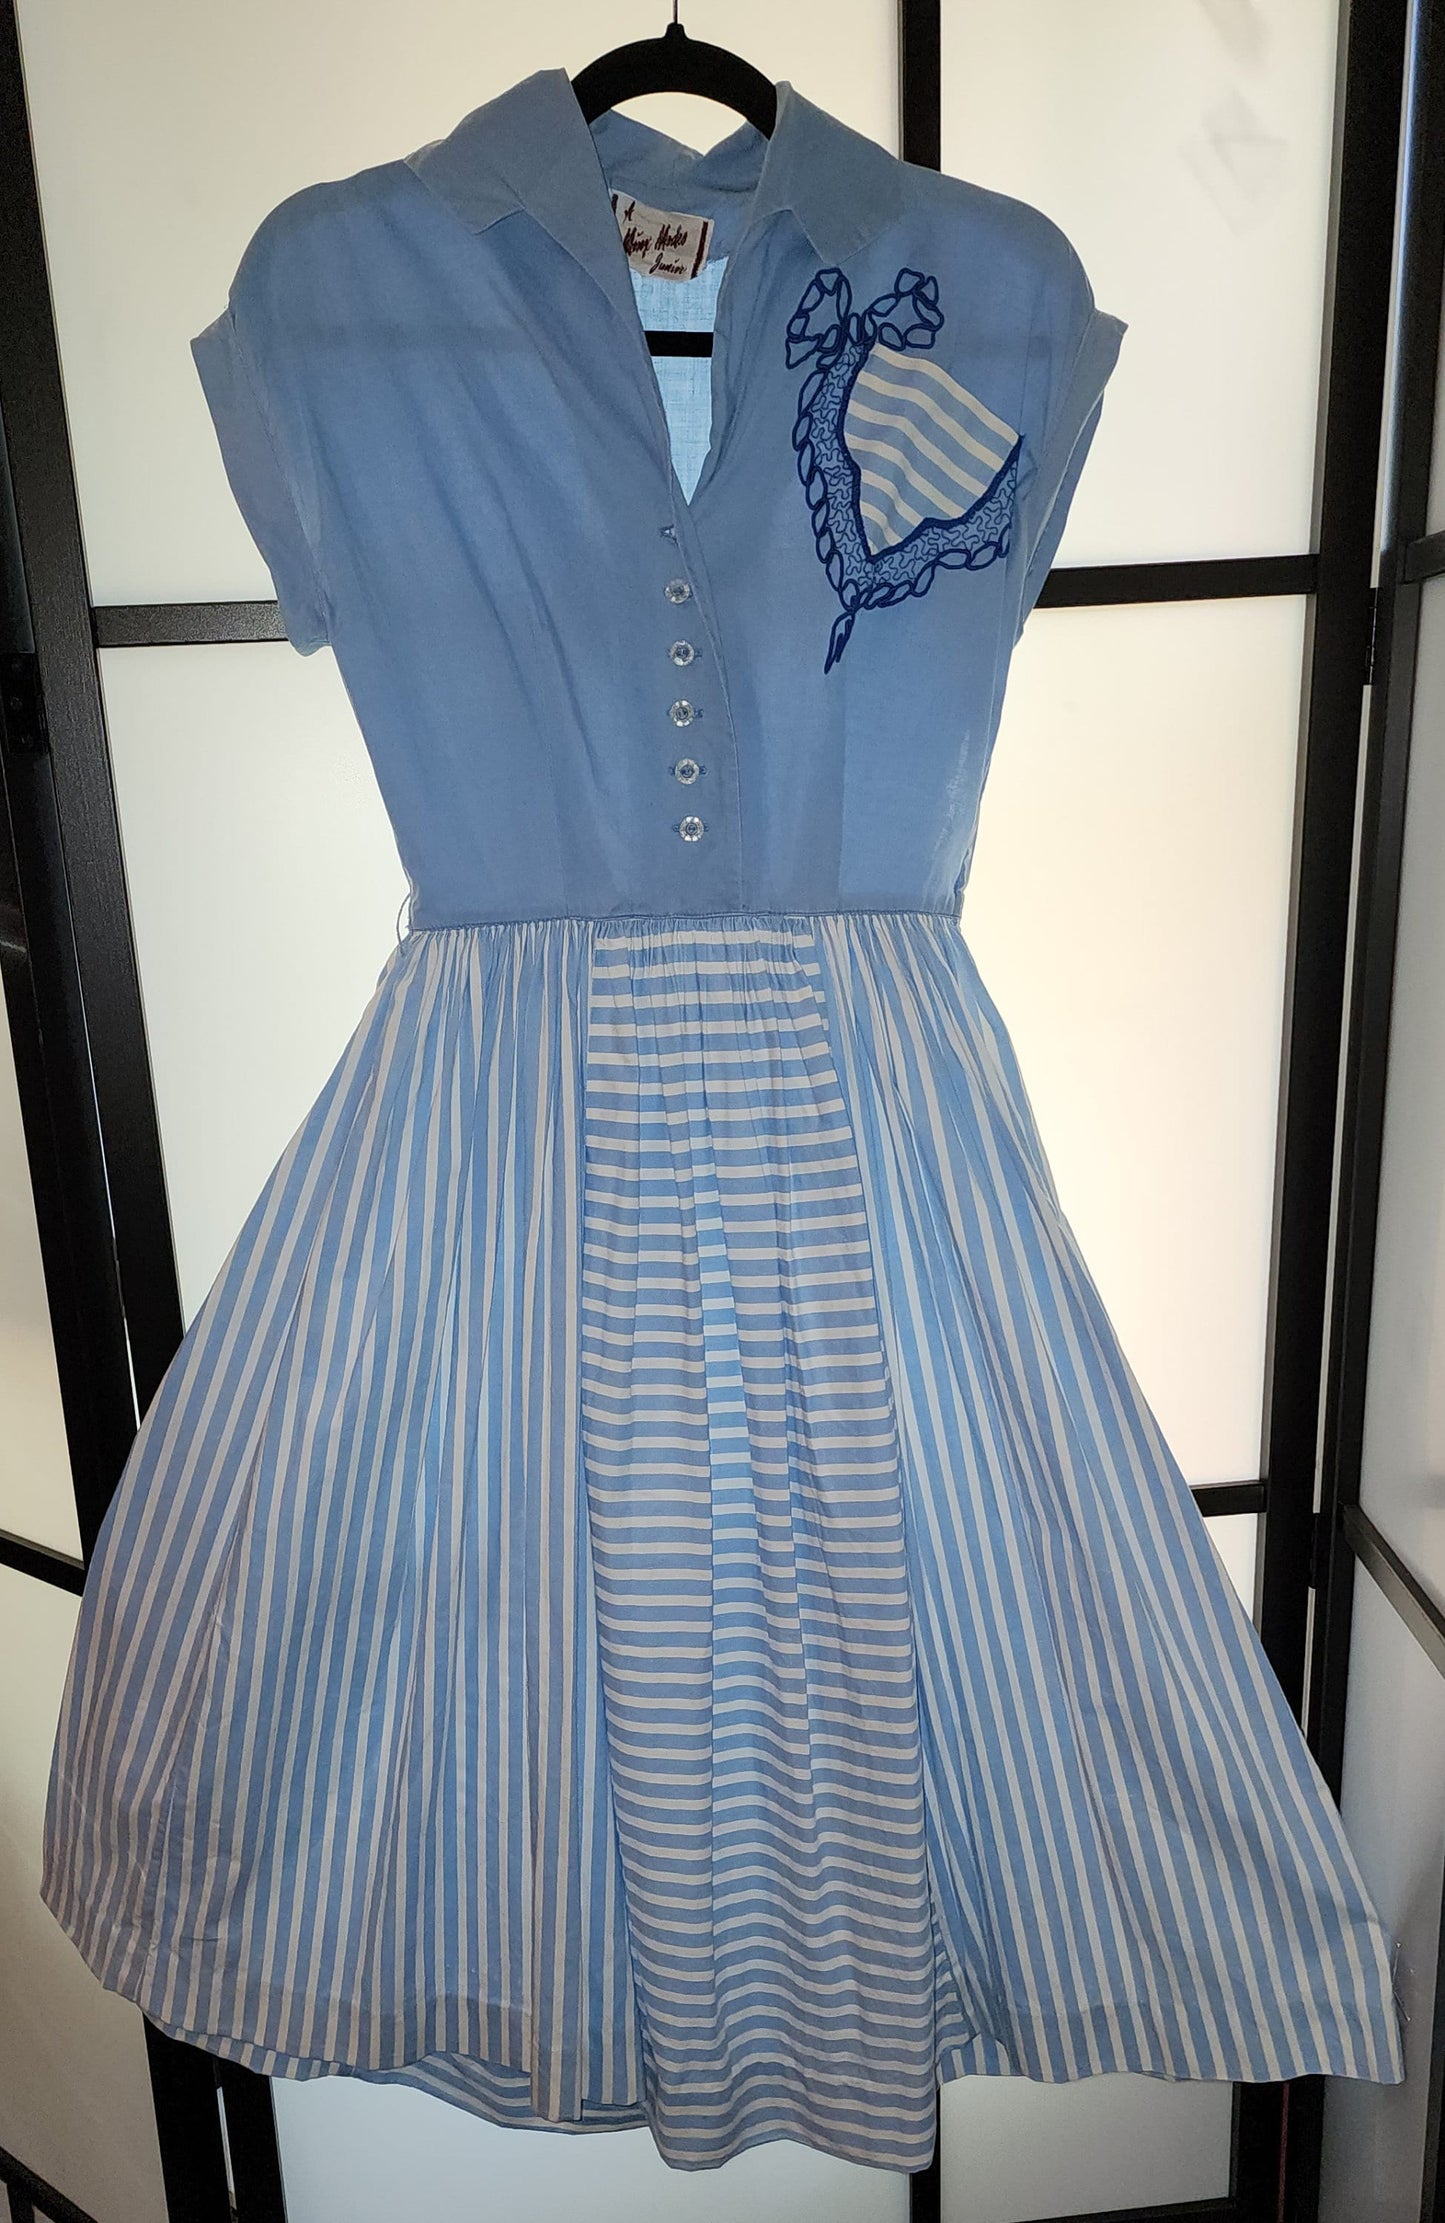 Vintage 1950s Dress Blue White Striped Cotton Day Dress Full Skirt Unique Chest Pocket Minx Modes Mid Century Rockabilly XS S